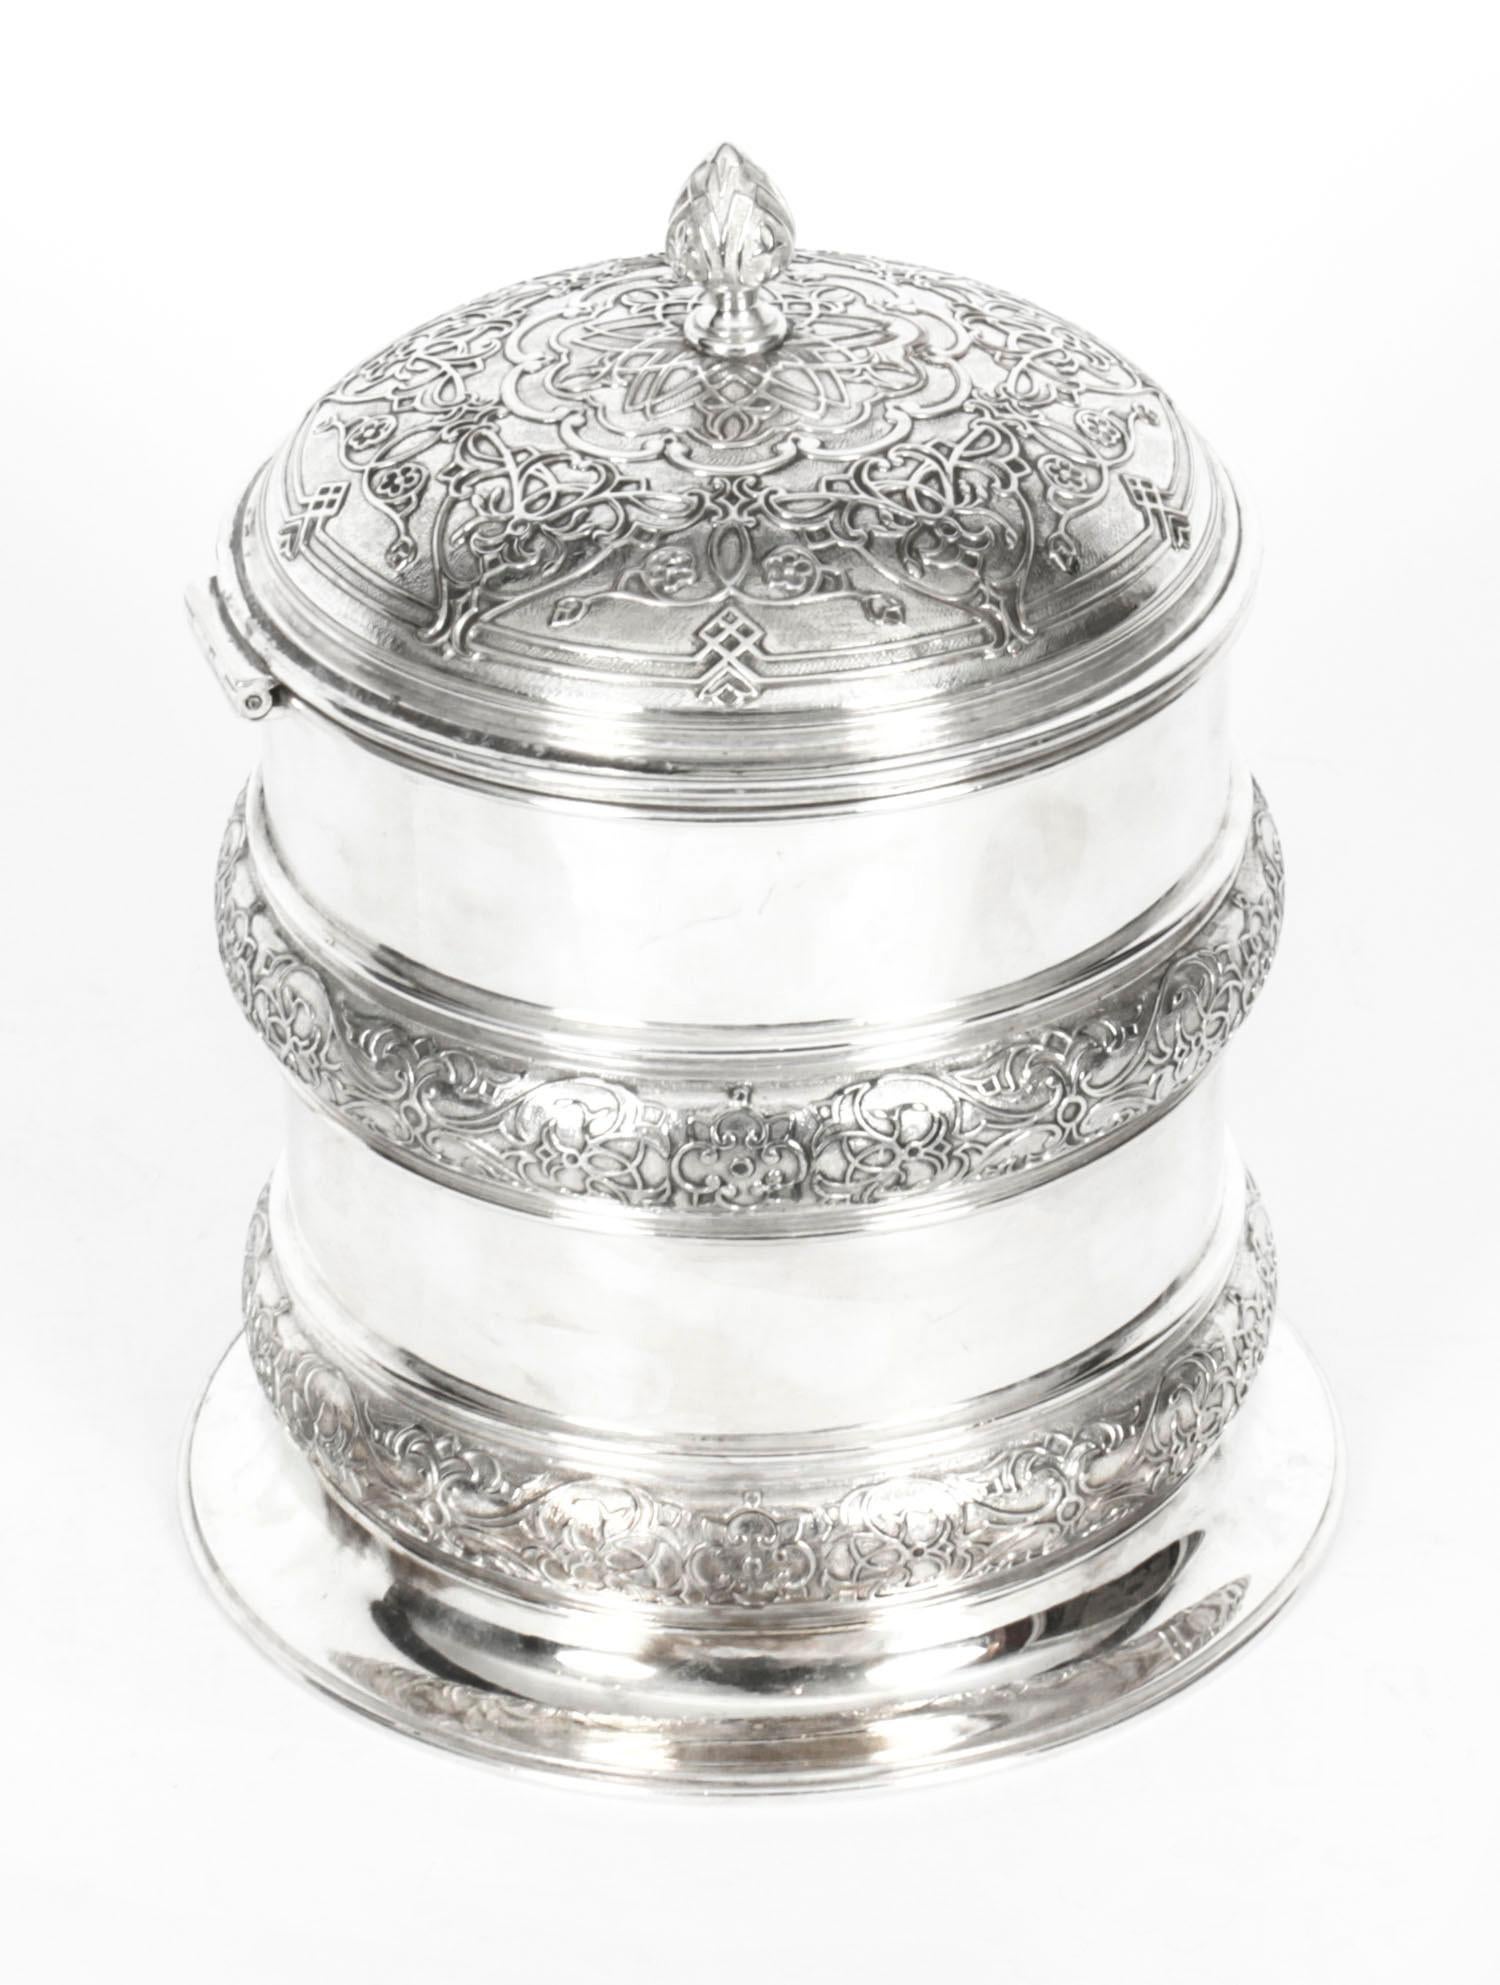 Antique Silver Plate Drum Biscuit Box Elkington & Co, 19th Century For Sale 11